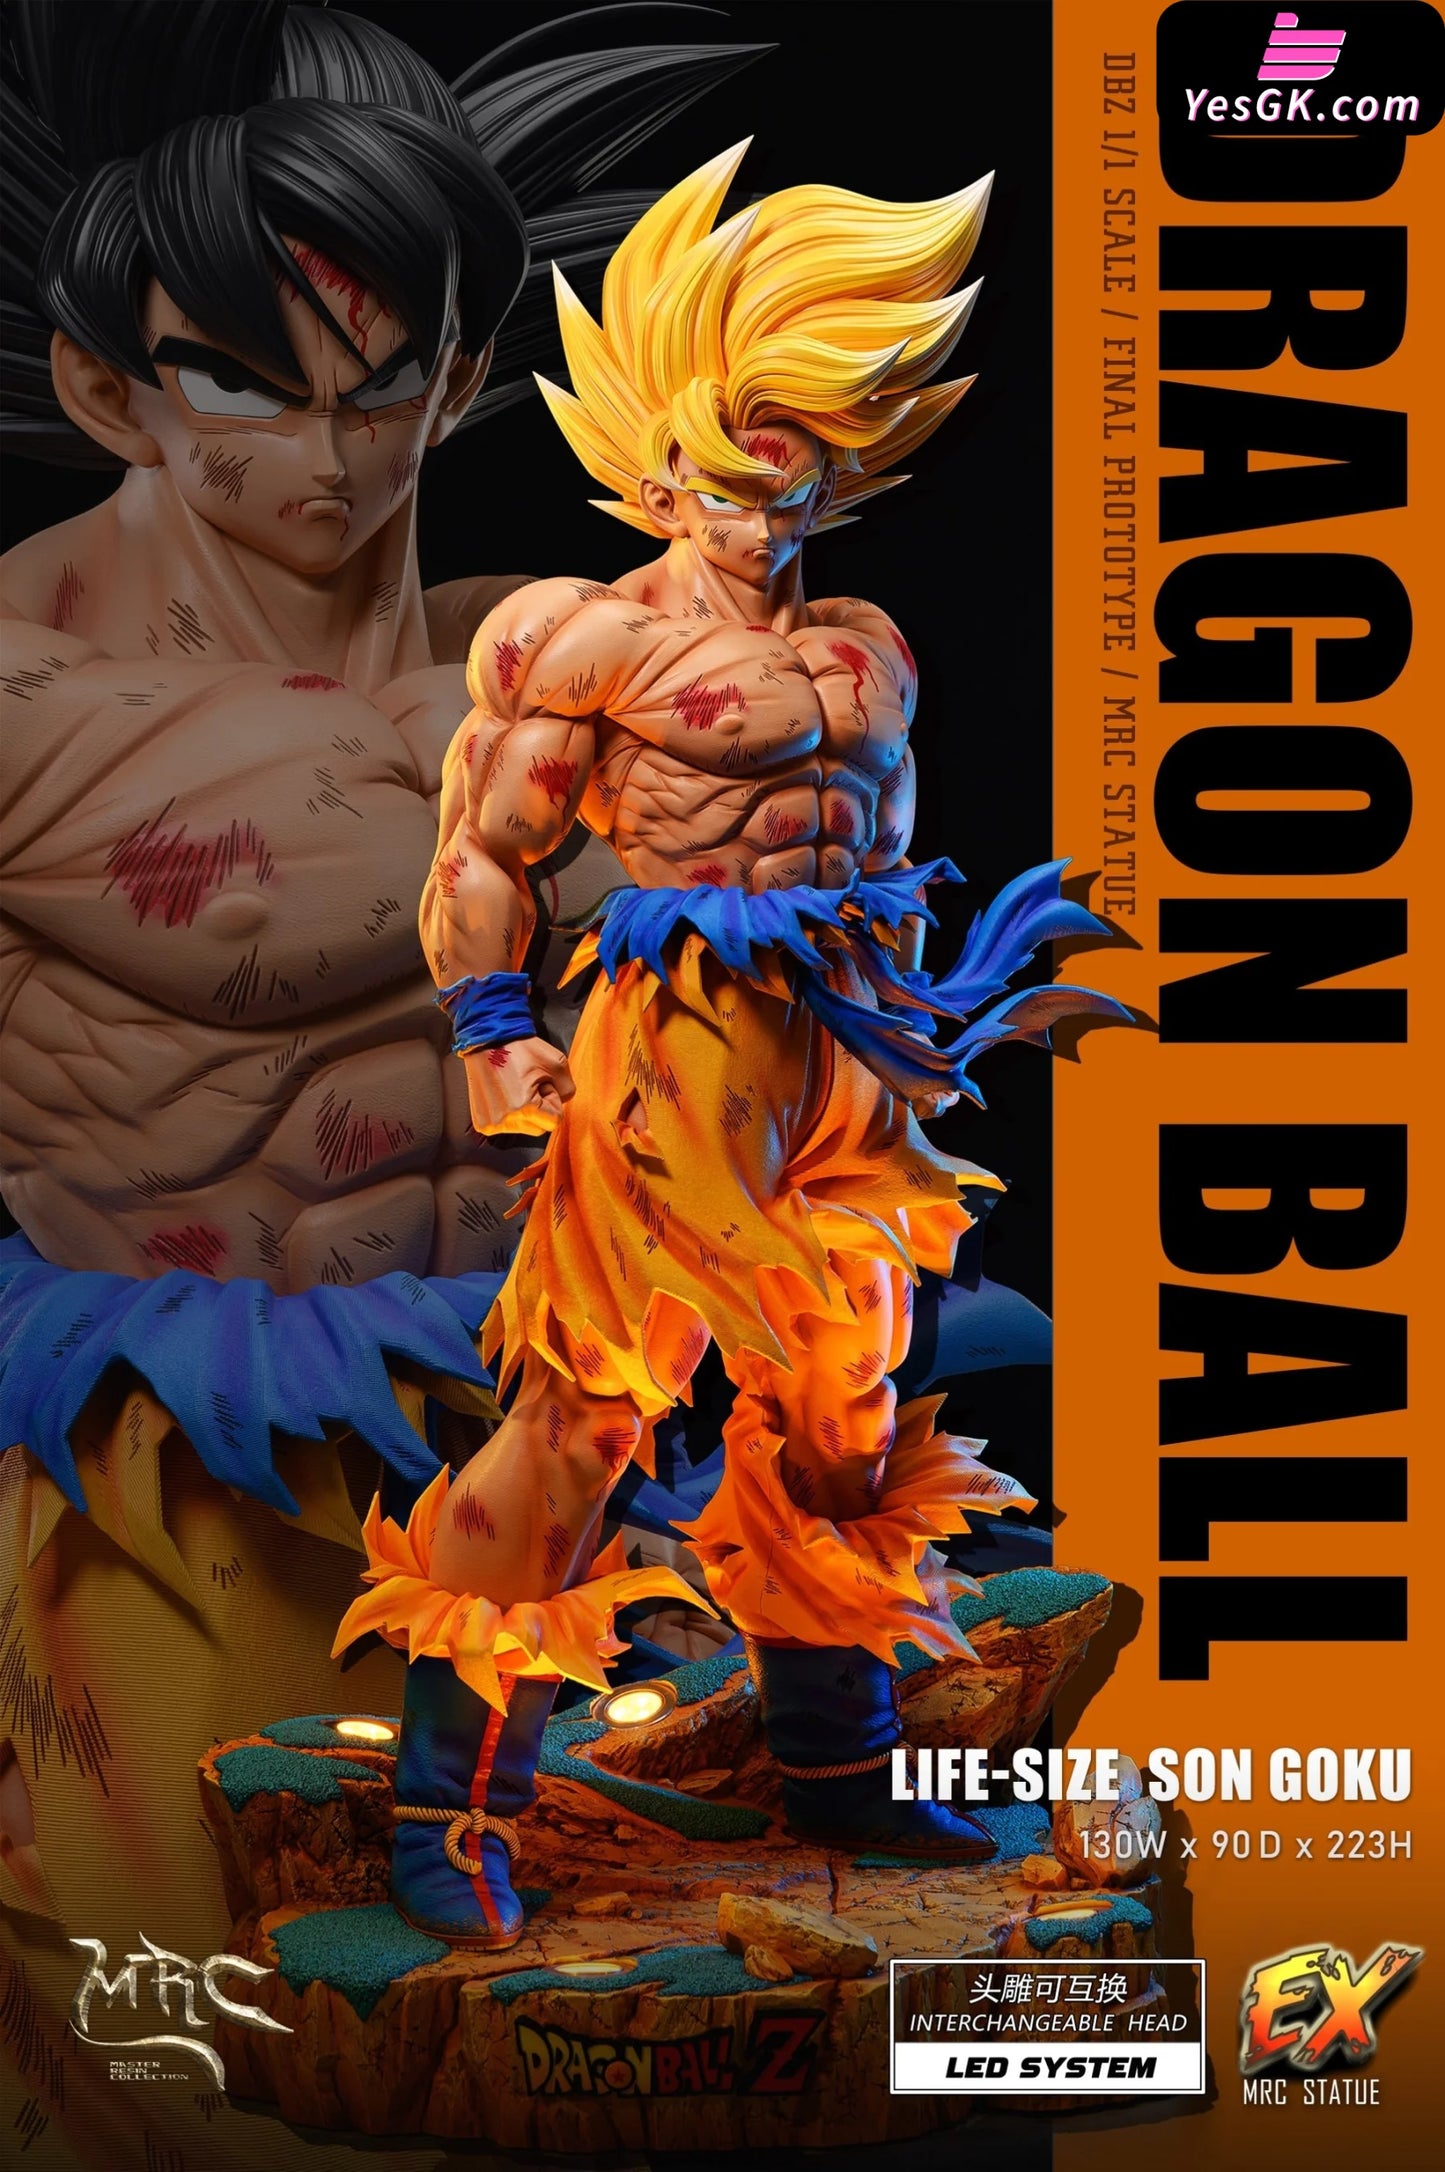 Dragon Ball 1/1 Life Size Son Goku Statue - Mrc Studio [Pre-Order] Deposit / Whole Body A Version